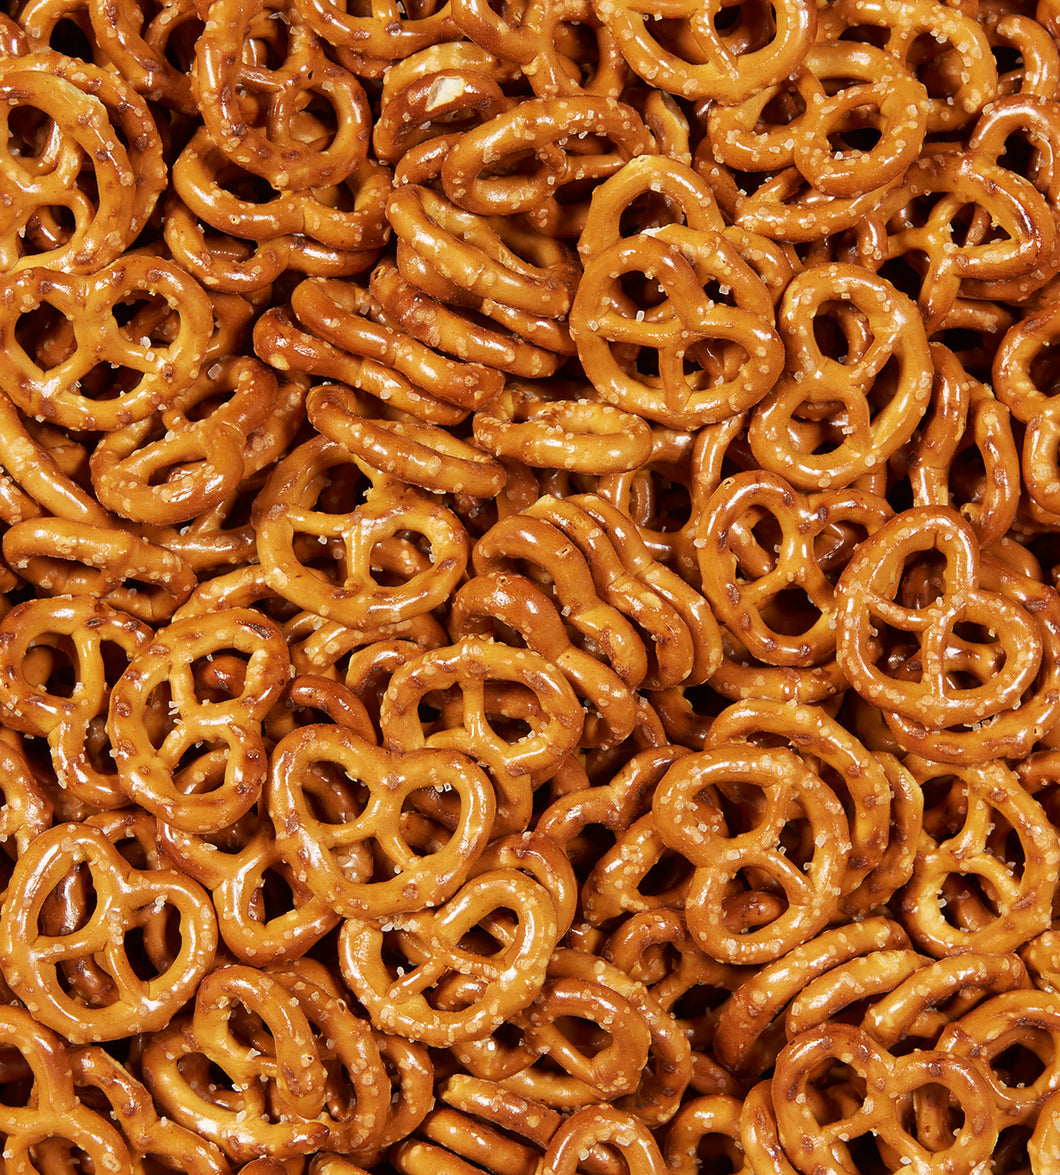 Mini salted pretzels